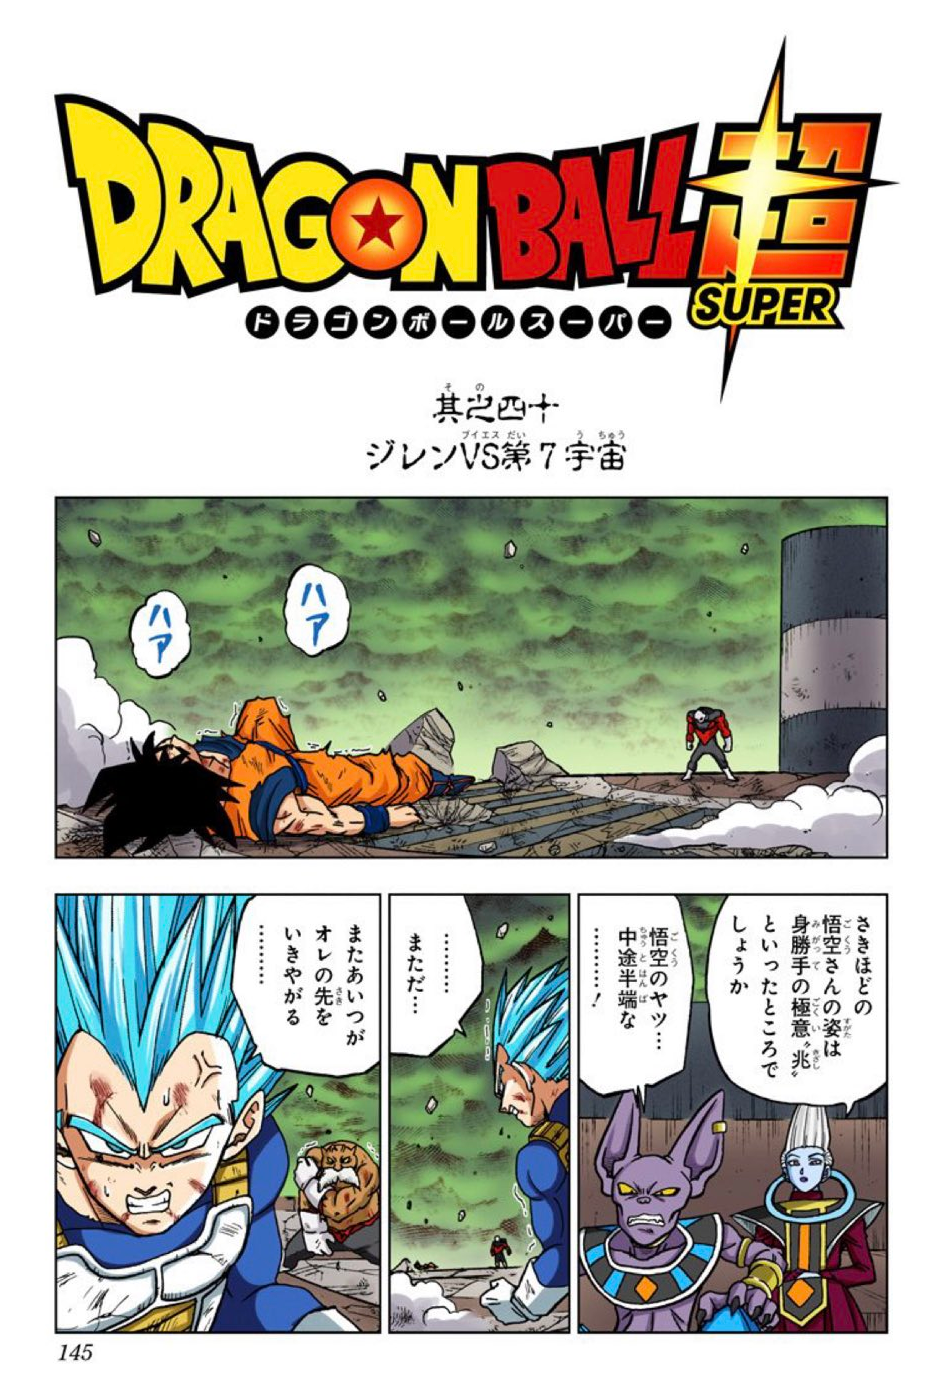 Dragon Ball Super (manga) – Capítulo 93 – DB UNIVERSO